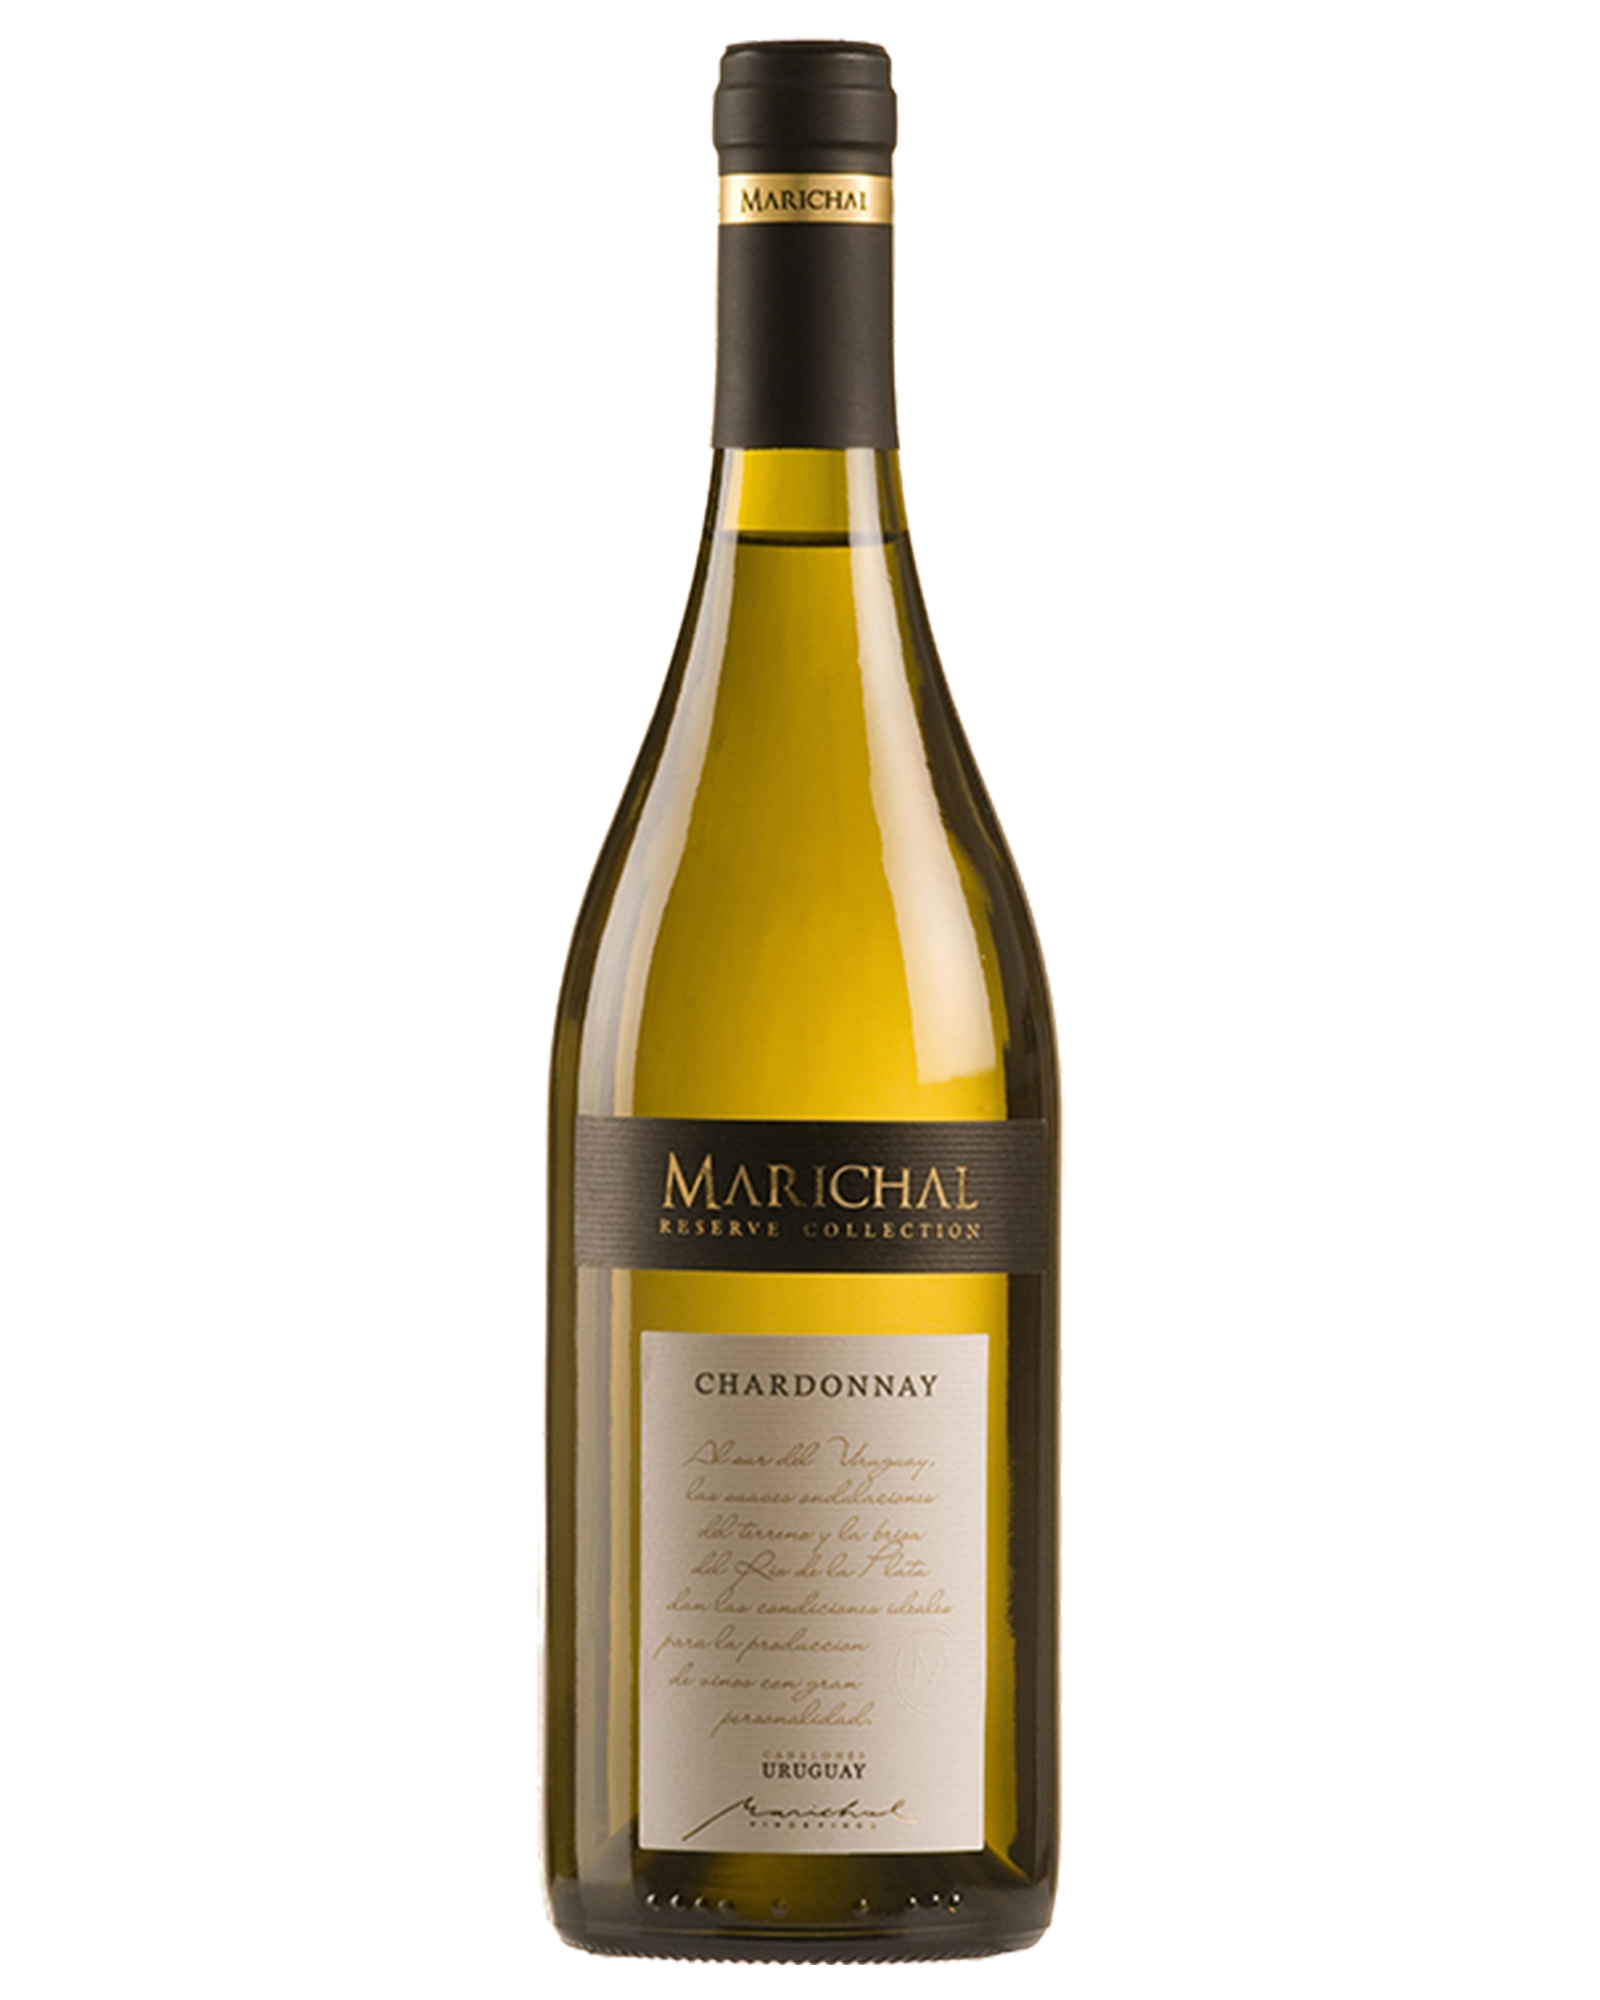 Marichal Reserve Collection Chardonnay 2012